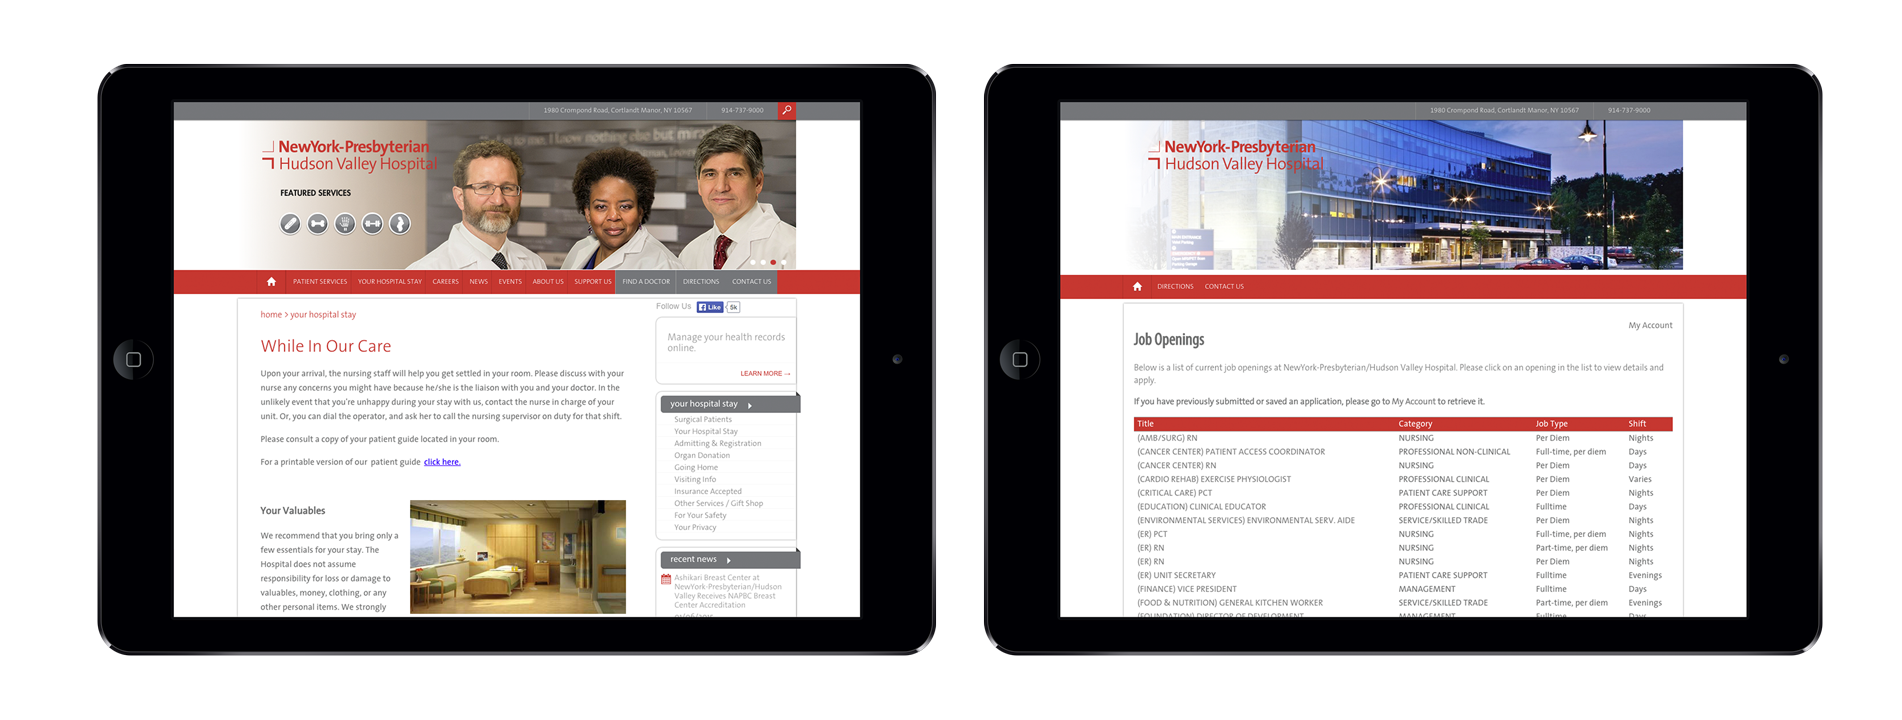 Our Work: New York Presbyterian Hospital: Homepage Design - NP Group